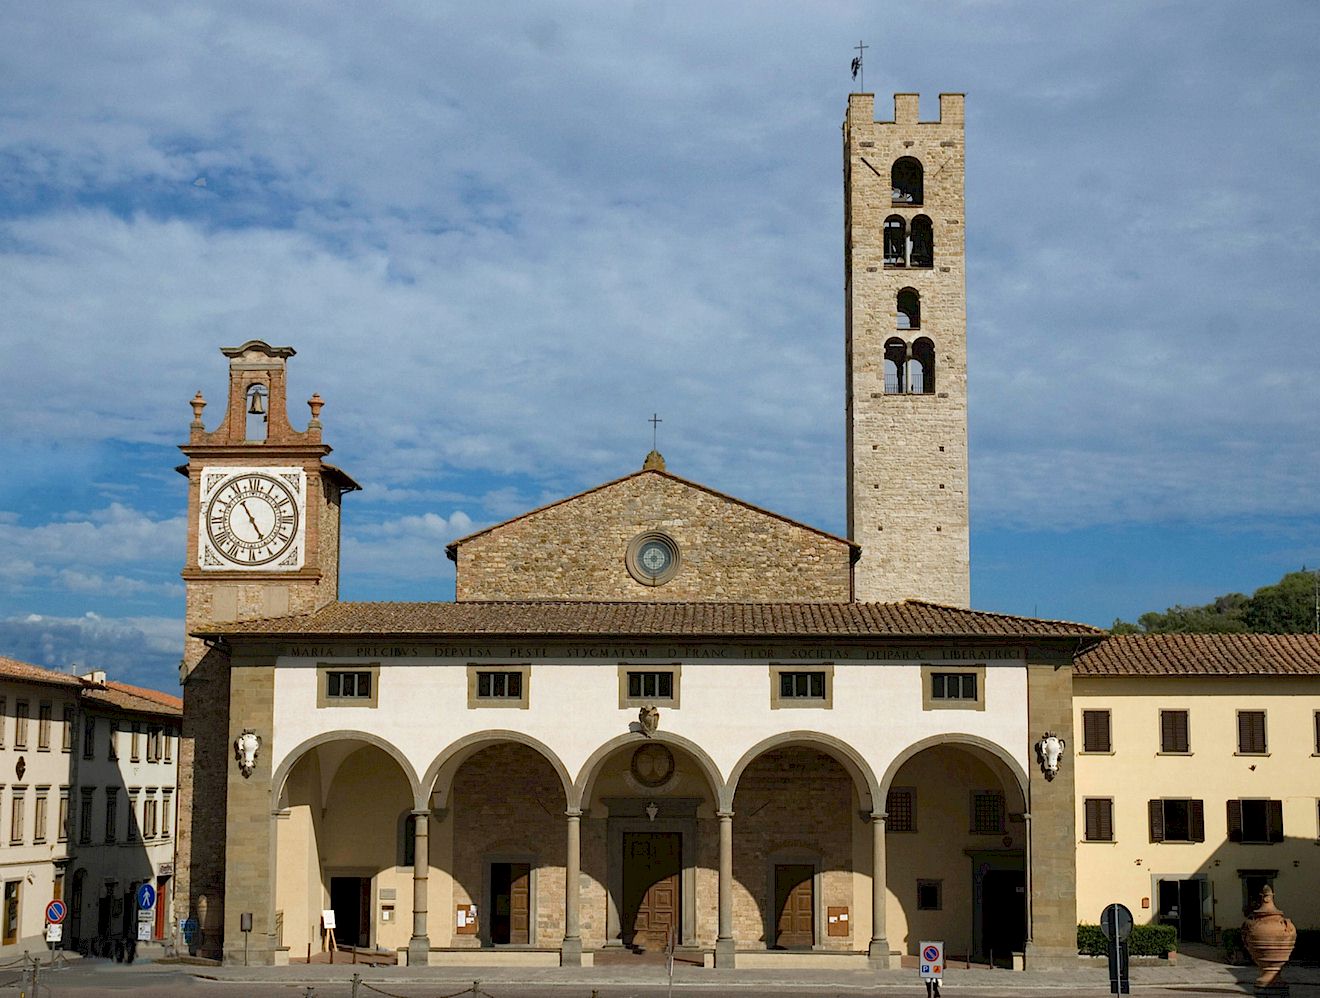 Basilica of Santa Maria at Impruneta